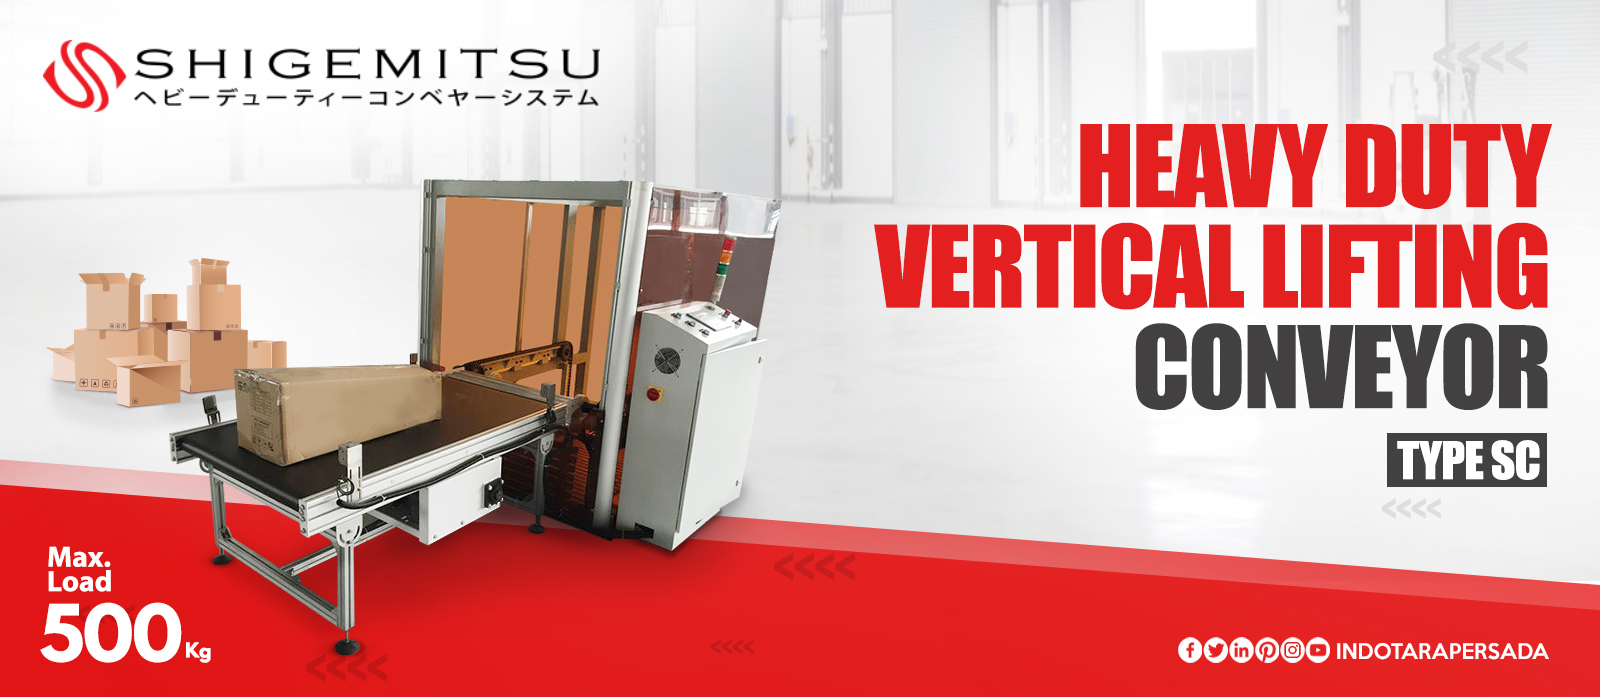 Jual Shigemitsu Vertical Lifting Conveyor, Harga Vertical Lifting Conveyor, Jual Vertical Lifting Conveyor Dengan Harga Murah